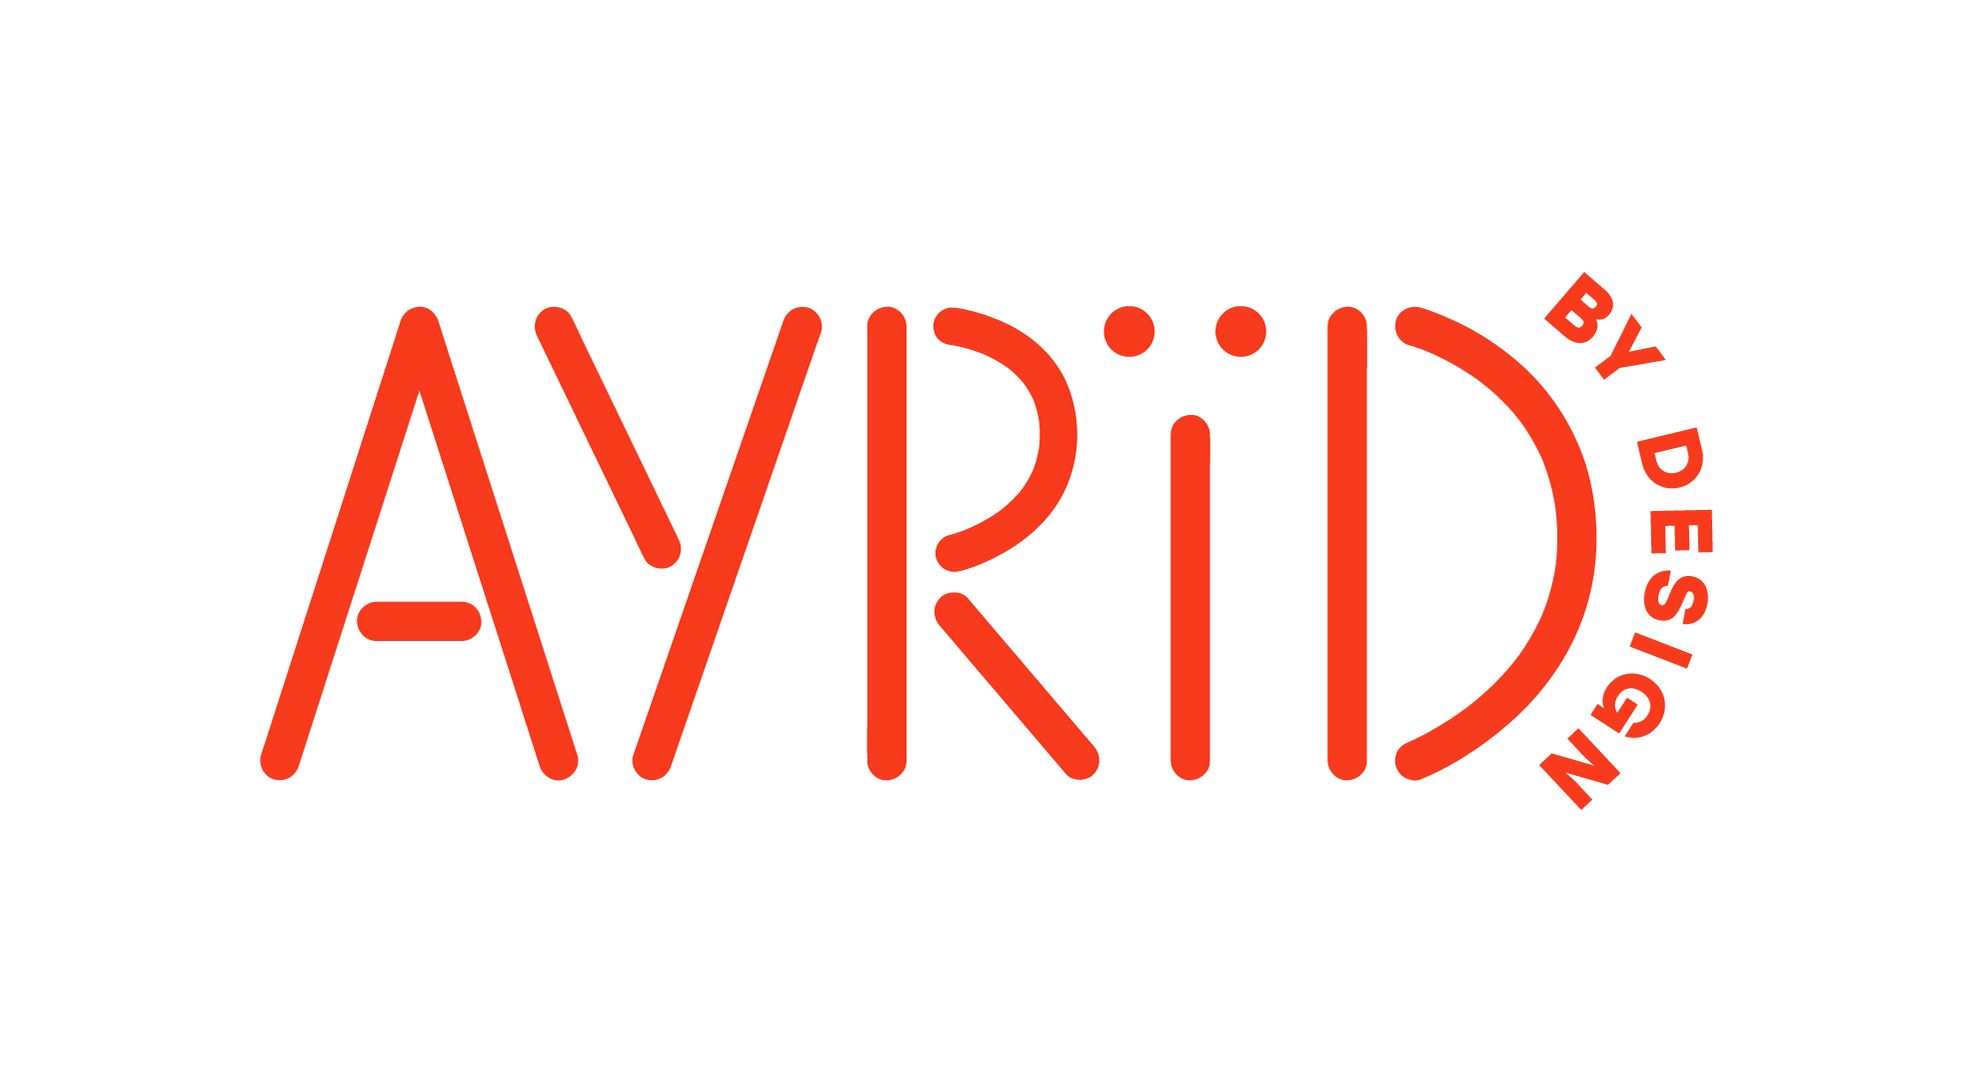 Ayrïd by Design